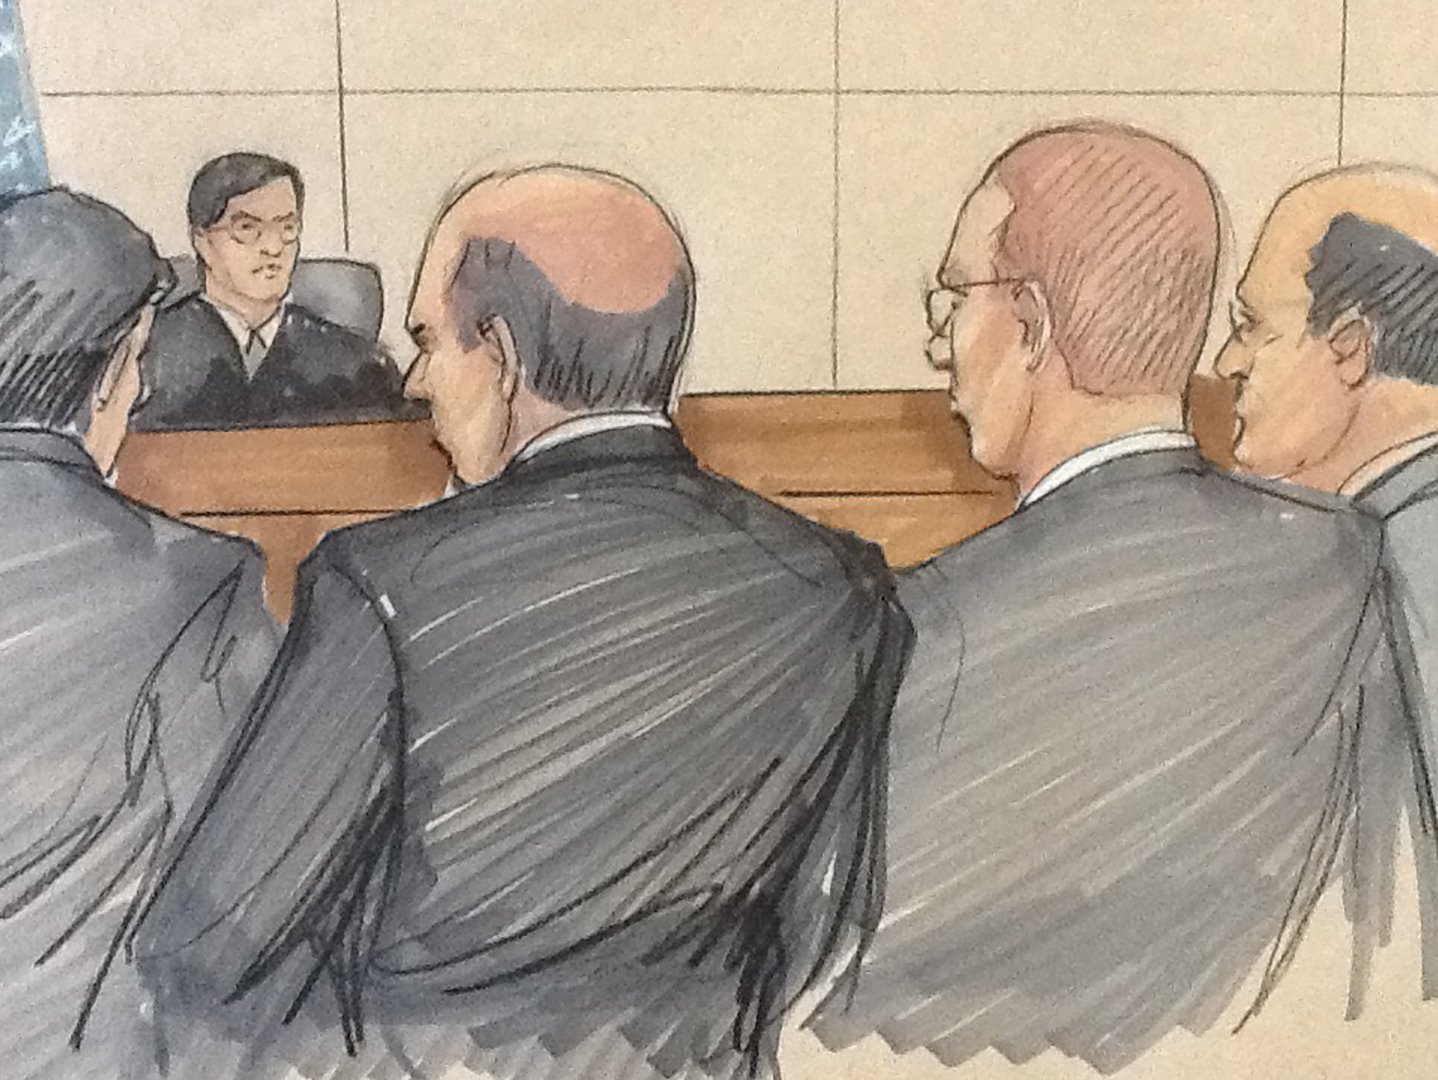 Courtroom sketch (Thomas Gianni)